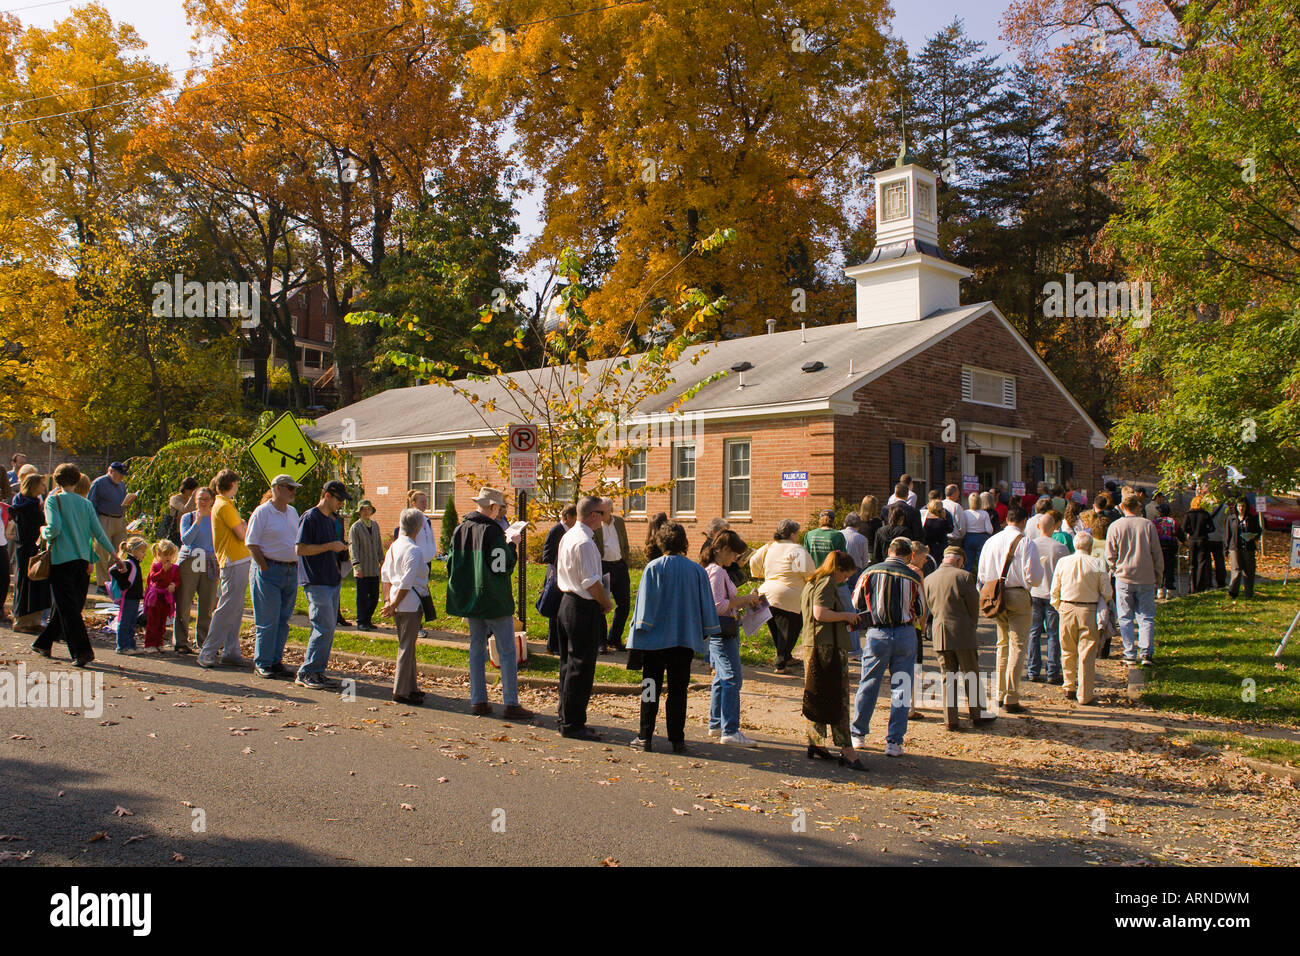 ARLINGTON VIRGINIA USA Wähler Line-up in den späten Vormittag Wahlrecht bei der Präsidentschaftswahl am 2. November 2004 Stockfoto